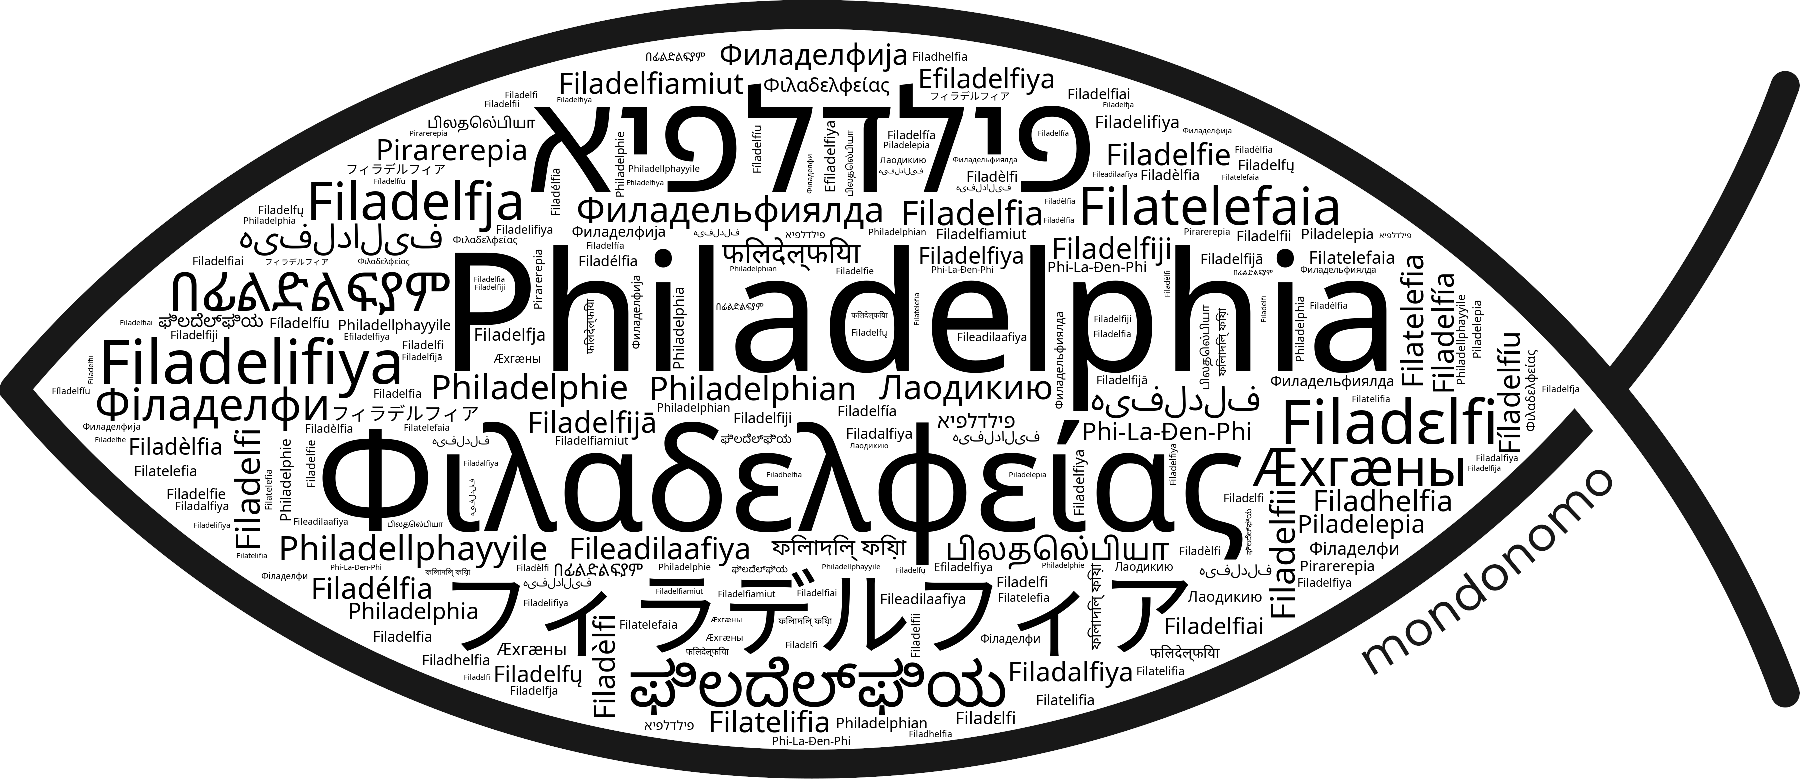 Name Philadelphia in the world's Bibles